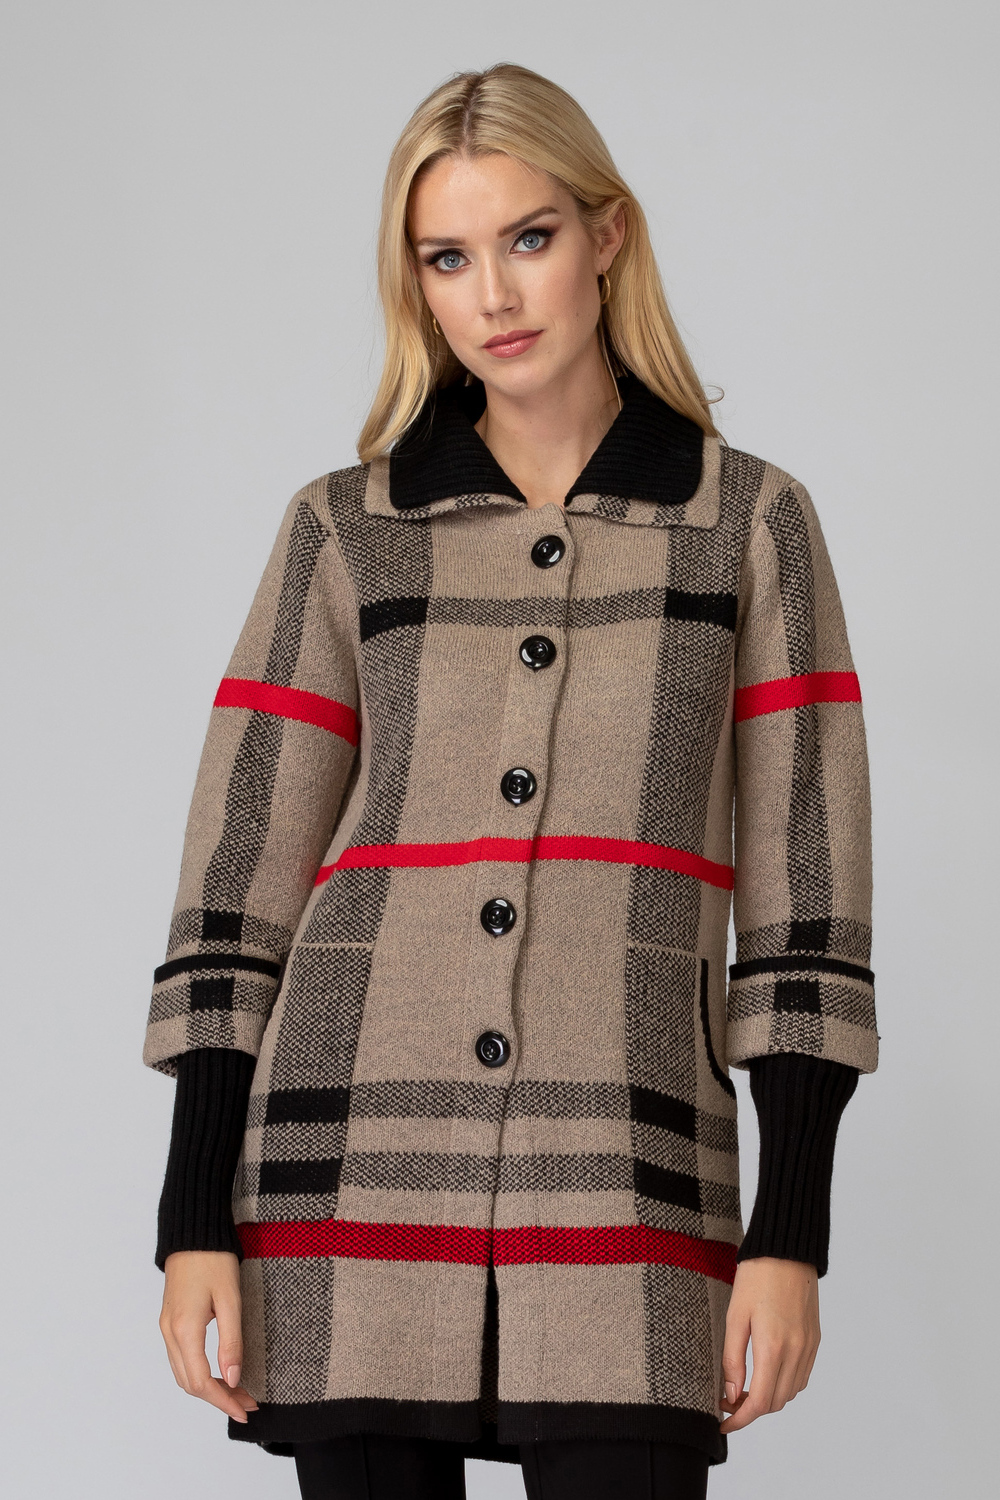 Joseph Ribkoff coat style 194918. Multi